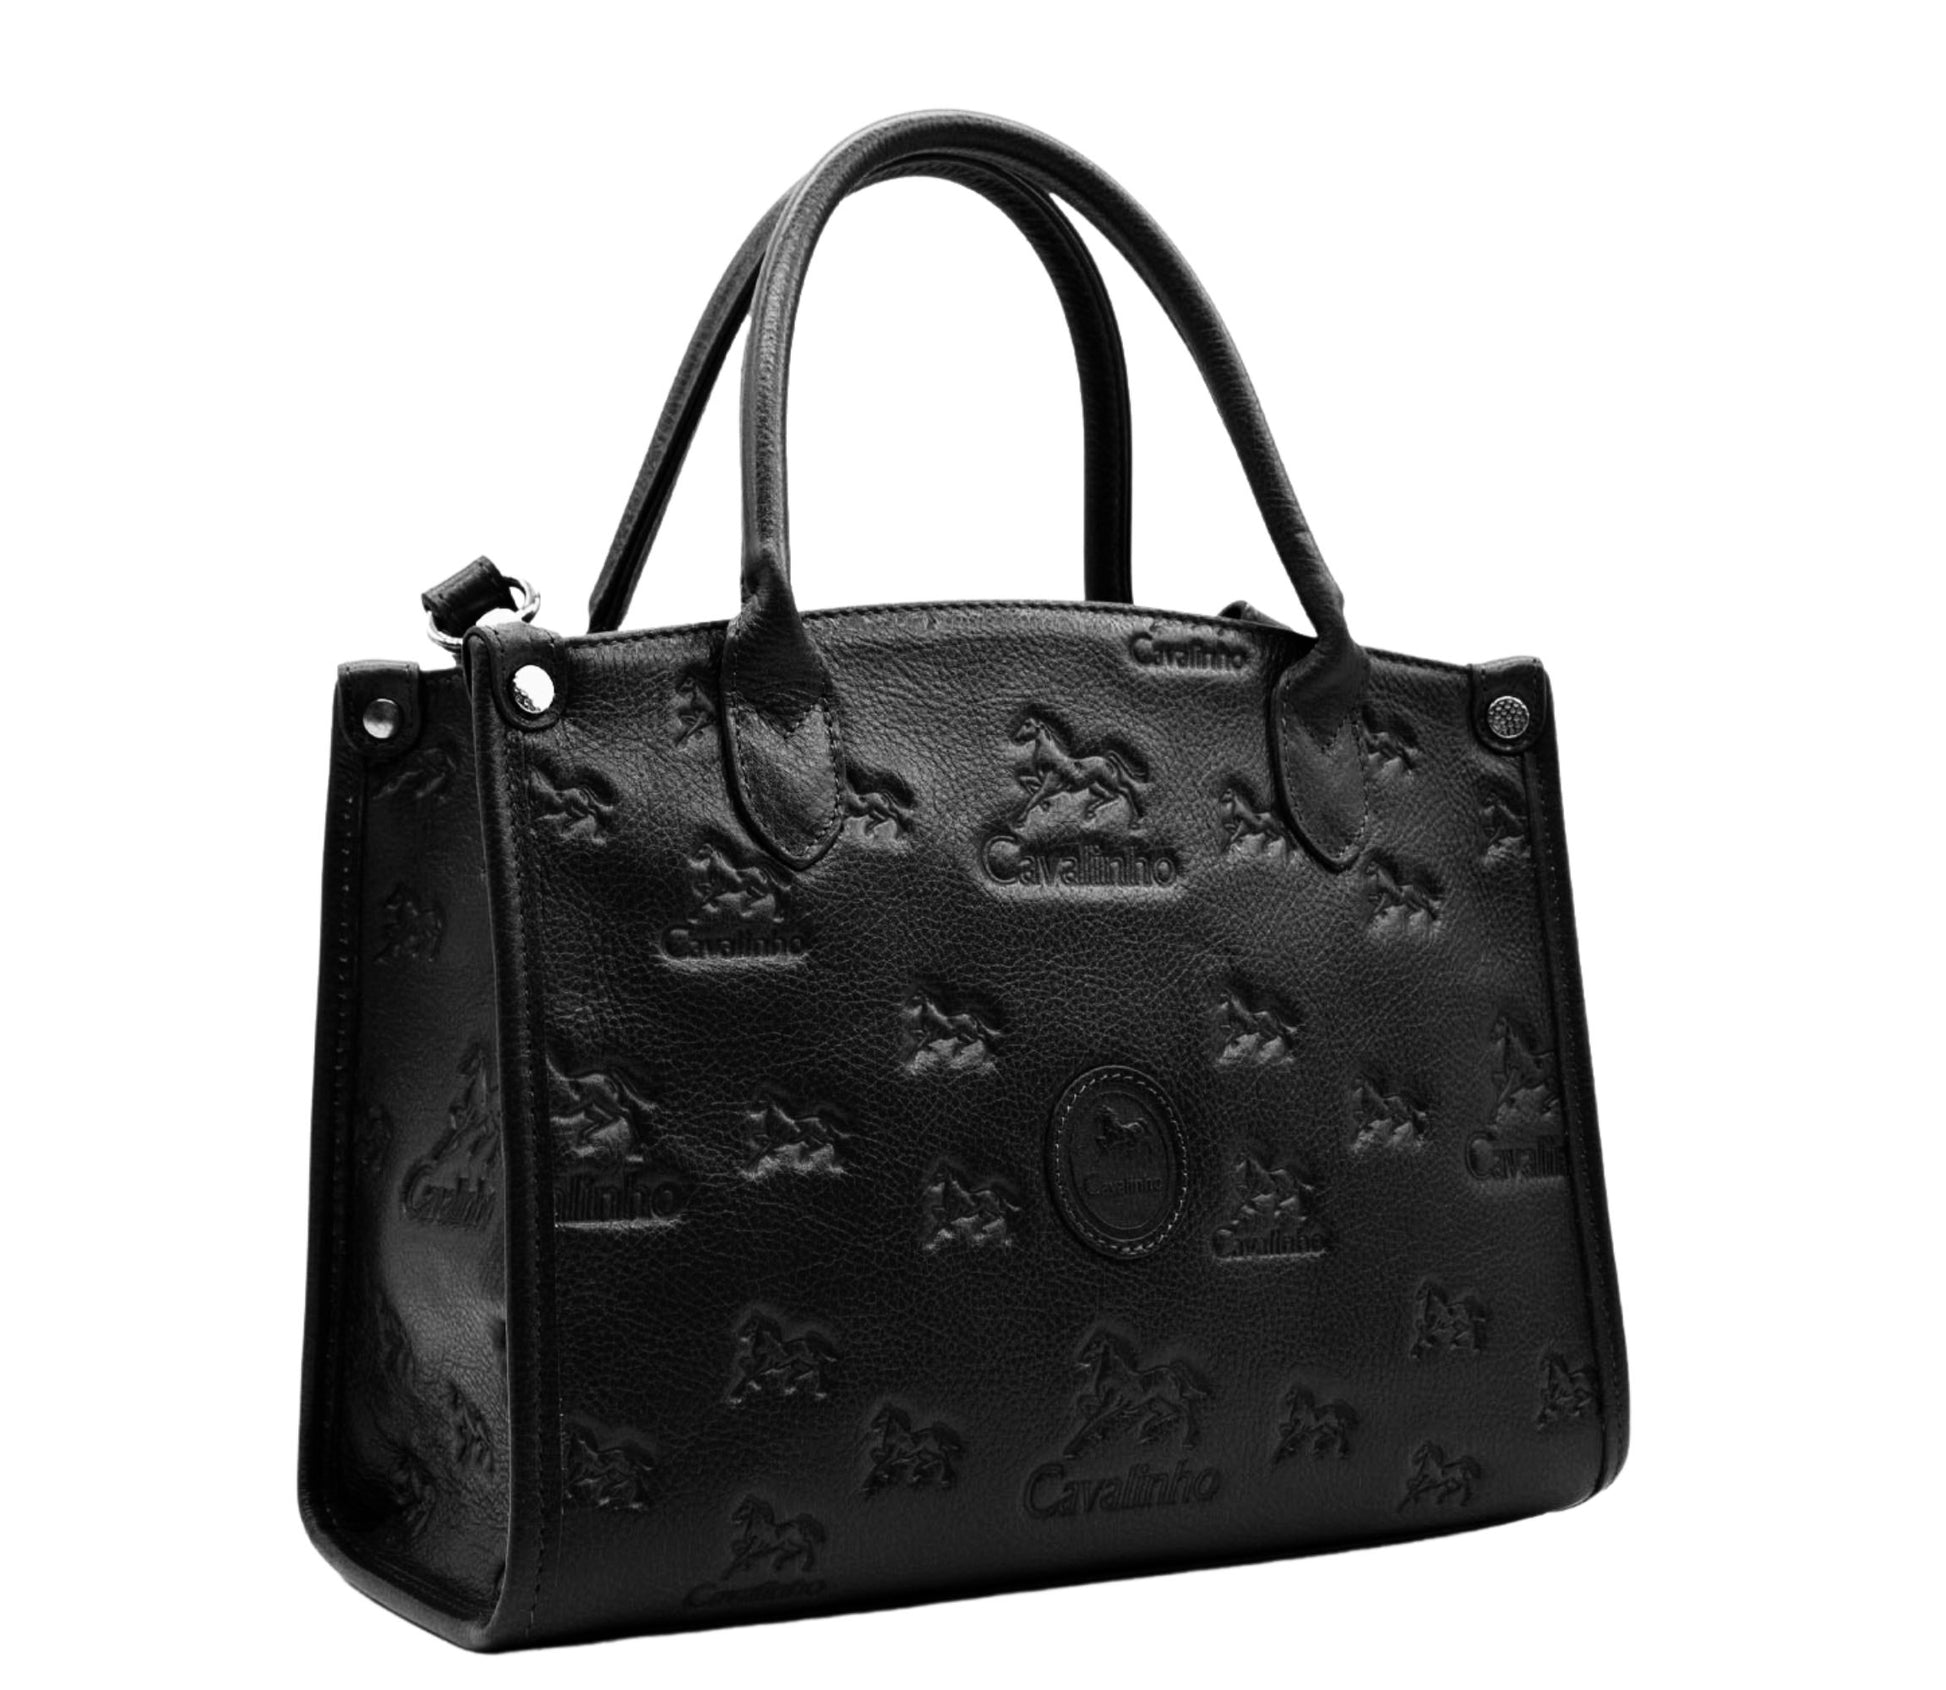 Cavalinho Cavalo Lusitano Leather Handbag - Black - 18090480.01.99_2